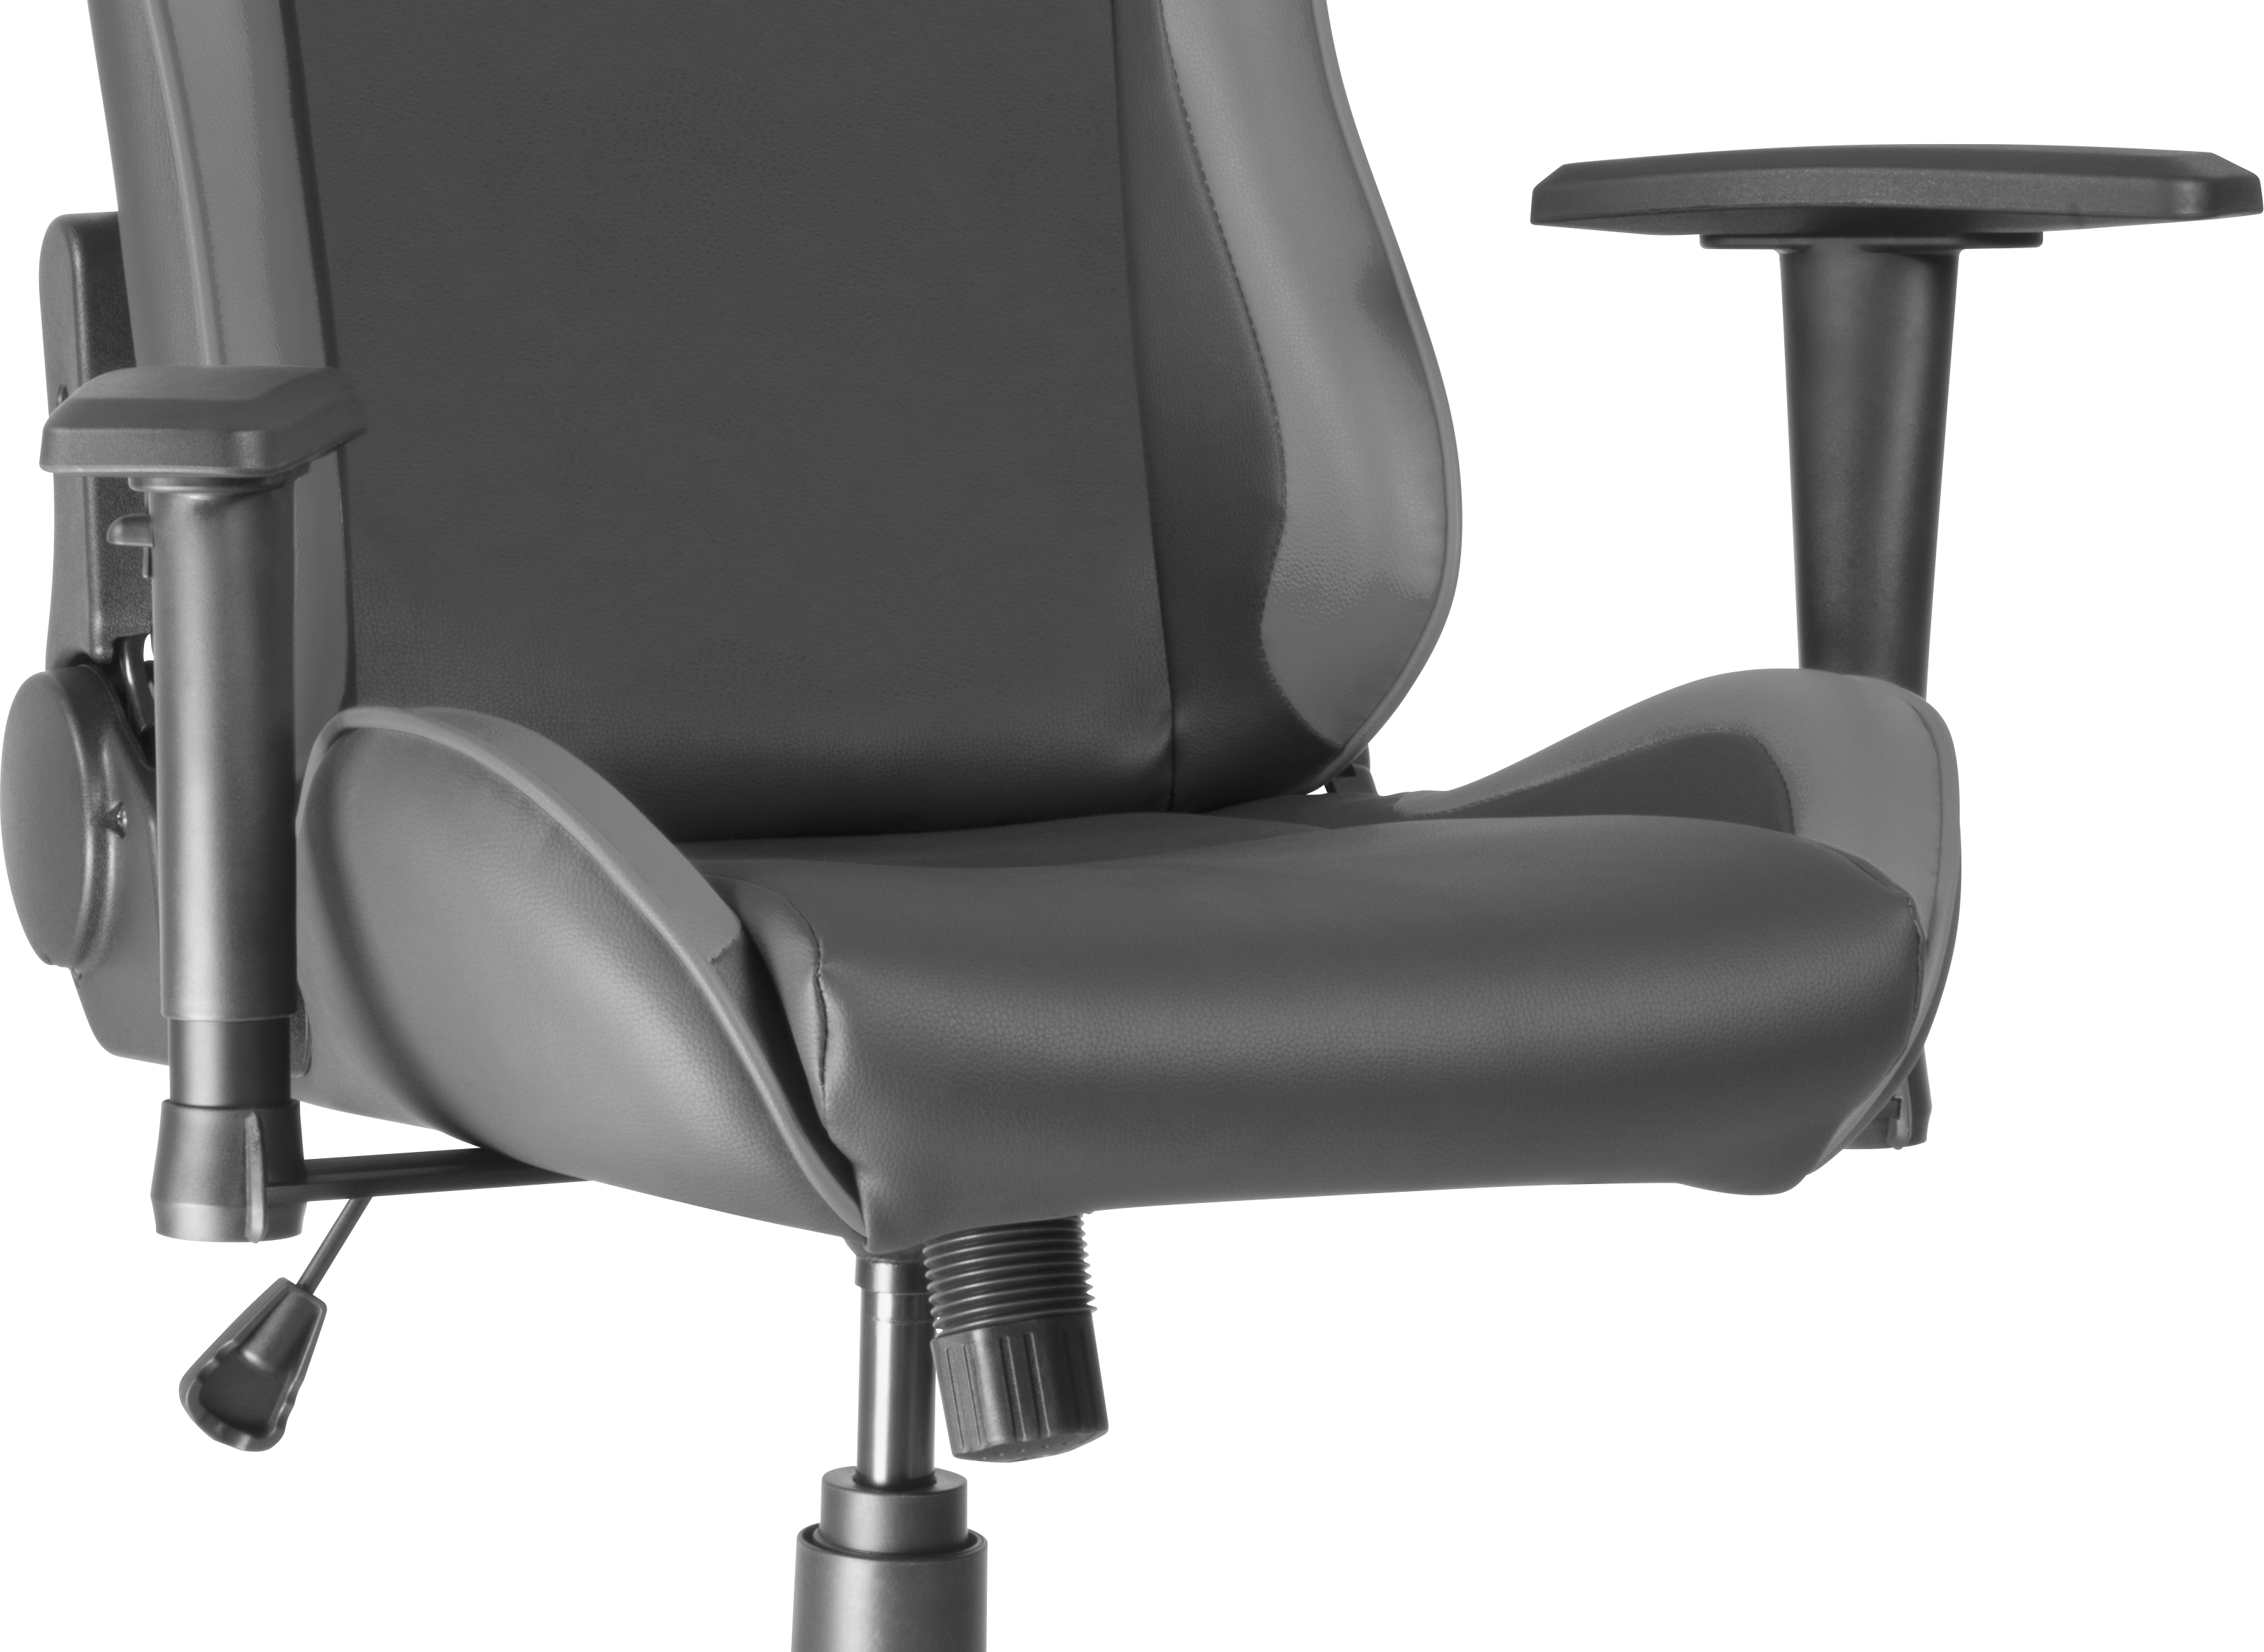 XANDOR Gaming Chair, black-grey